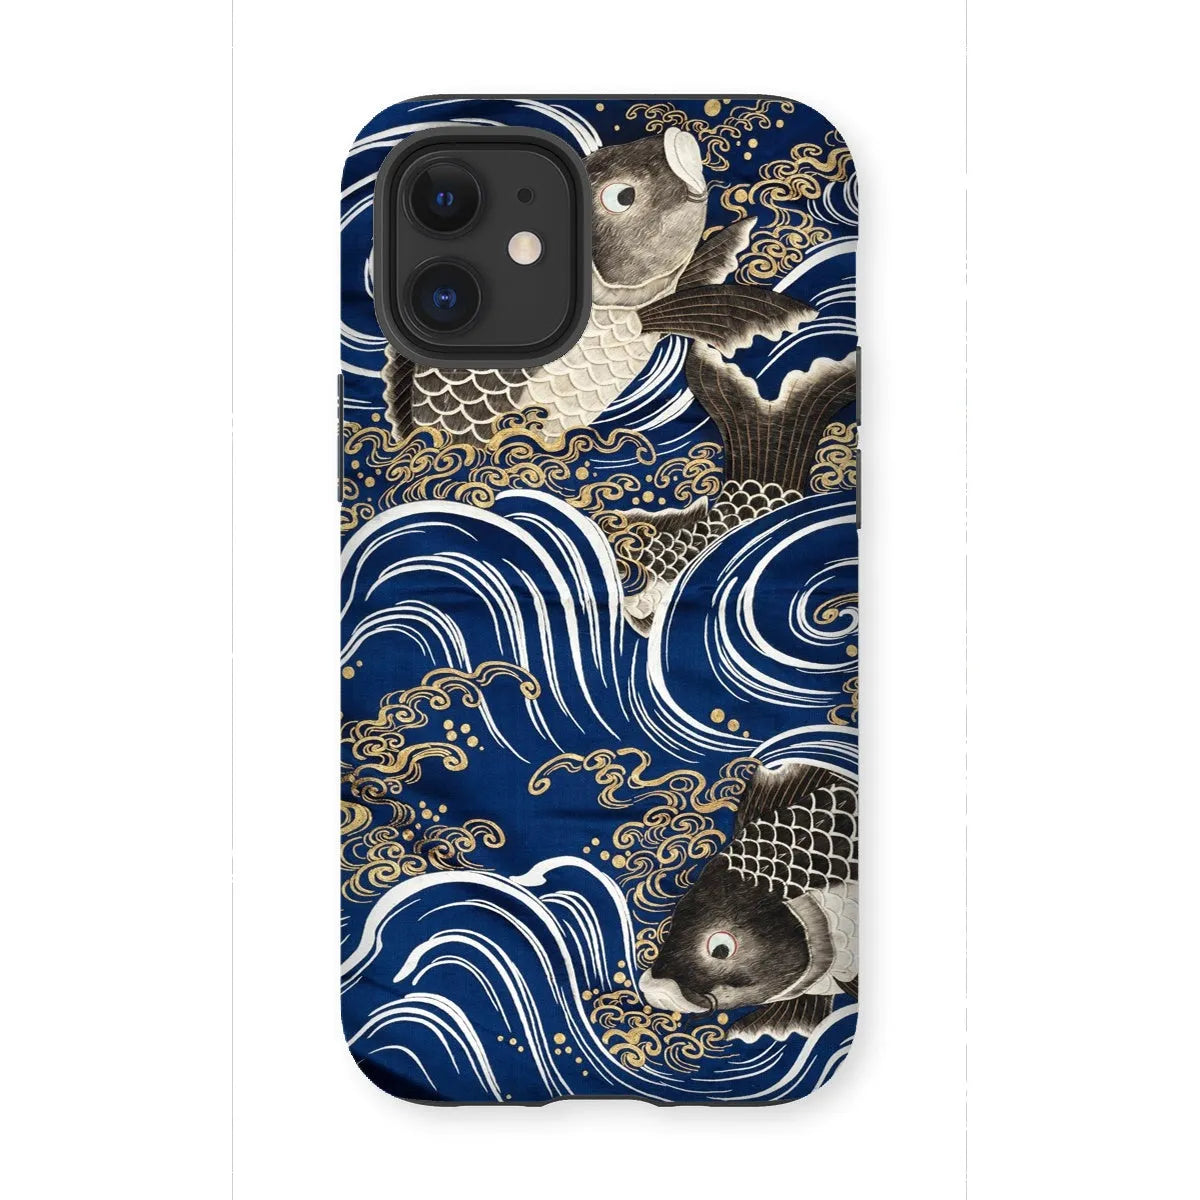 Fukusa And Carp - Japanese Meiji Period Art Phone Case - Iphone 12 Mini / Matte - Mobile Phone Cases - Aesthetic Art